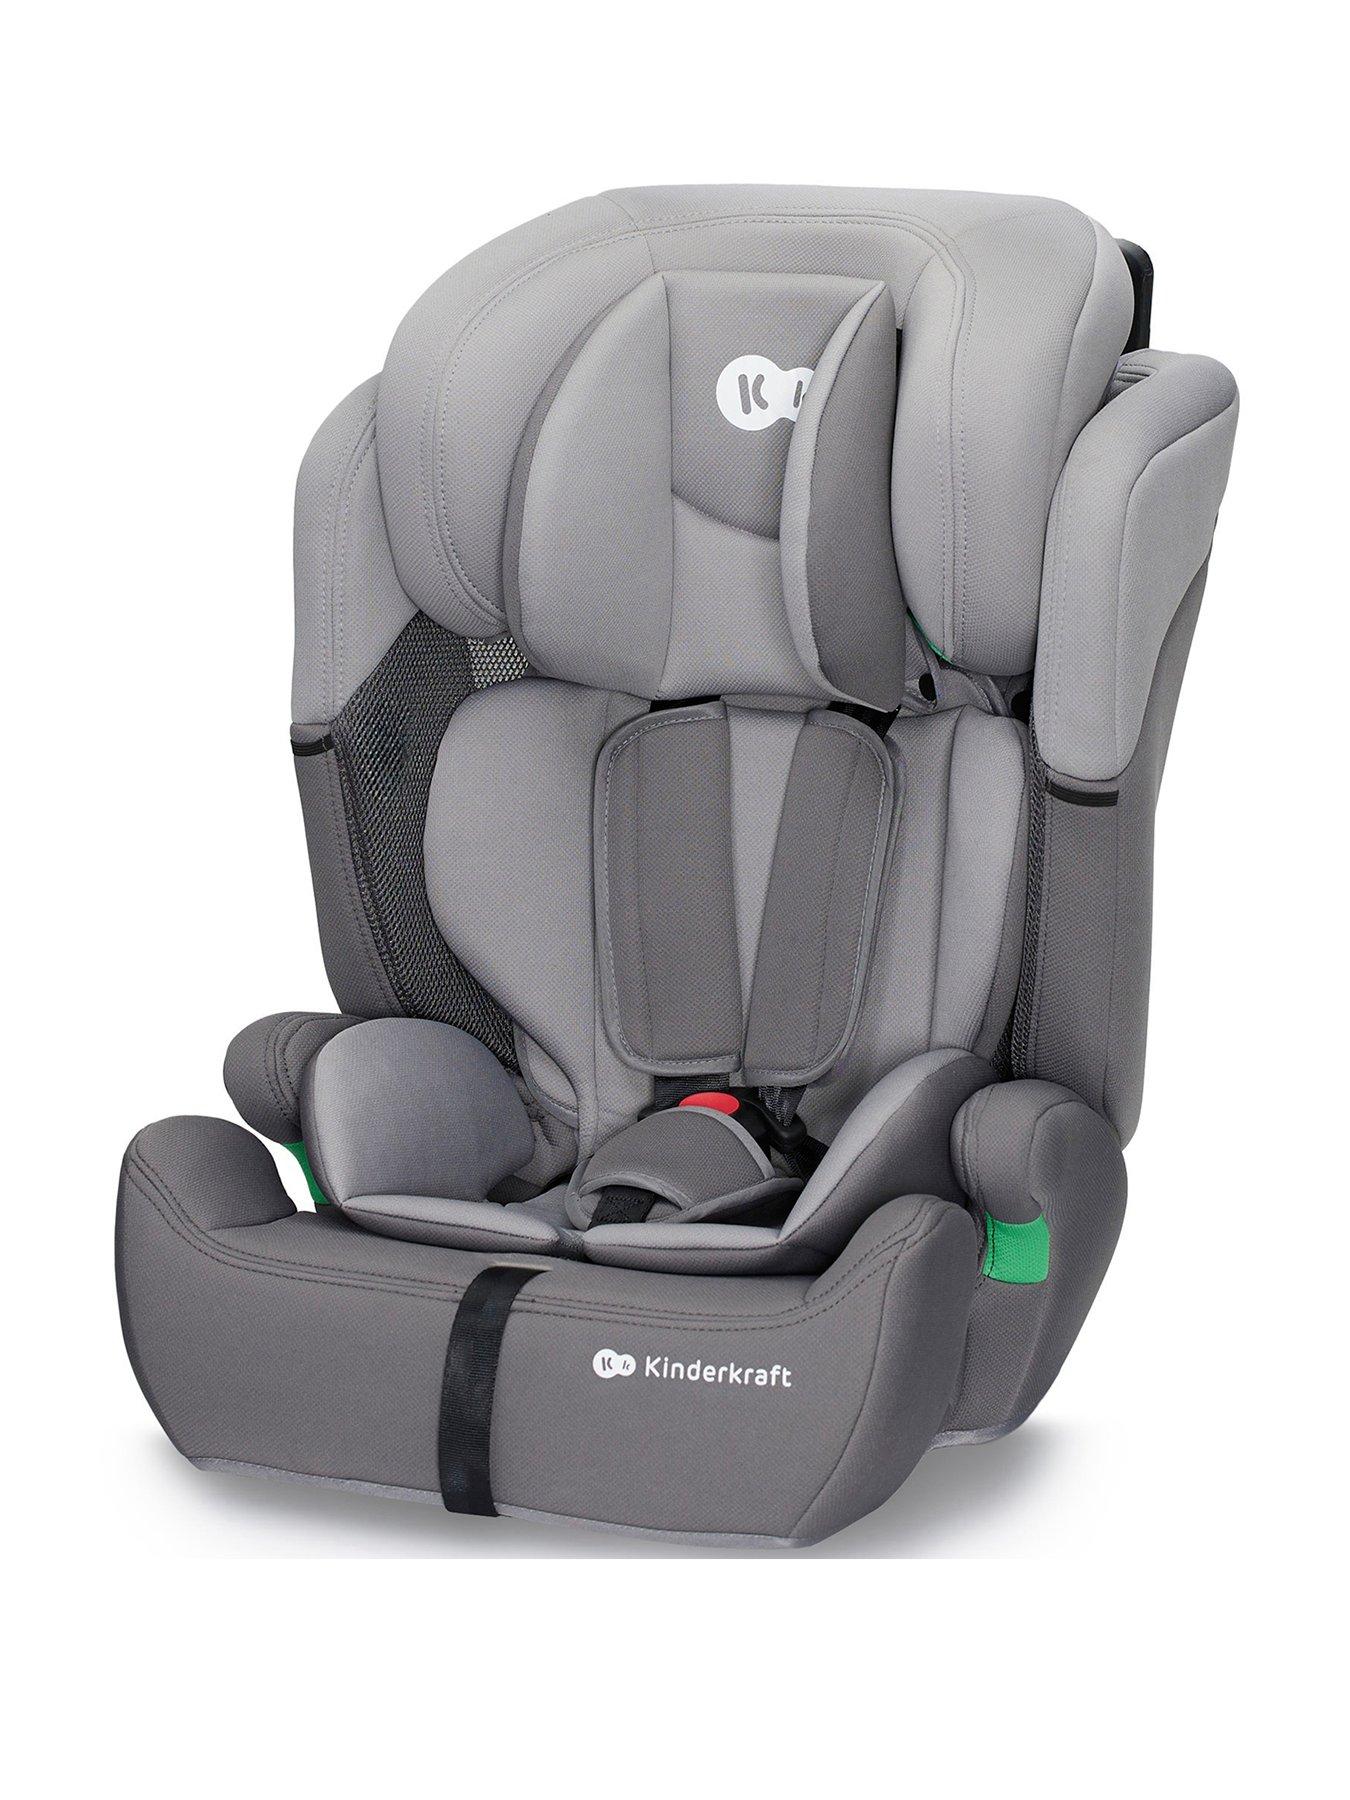 Kinderkraft MINK FX Isofix Base (compatible with Kinderkraft travel systems  with MINK PRO R129 Car Seat)